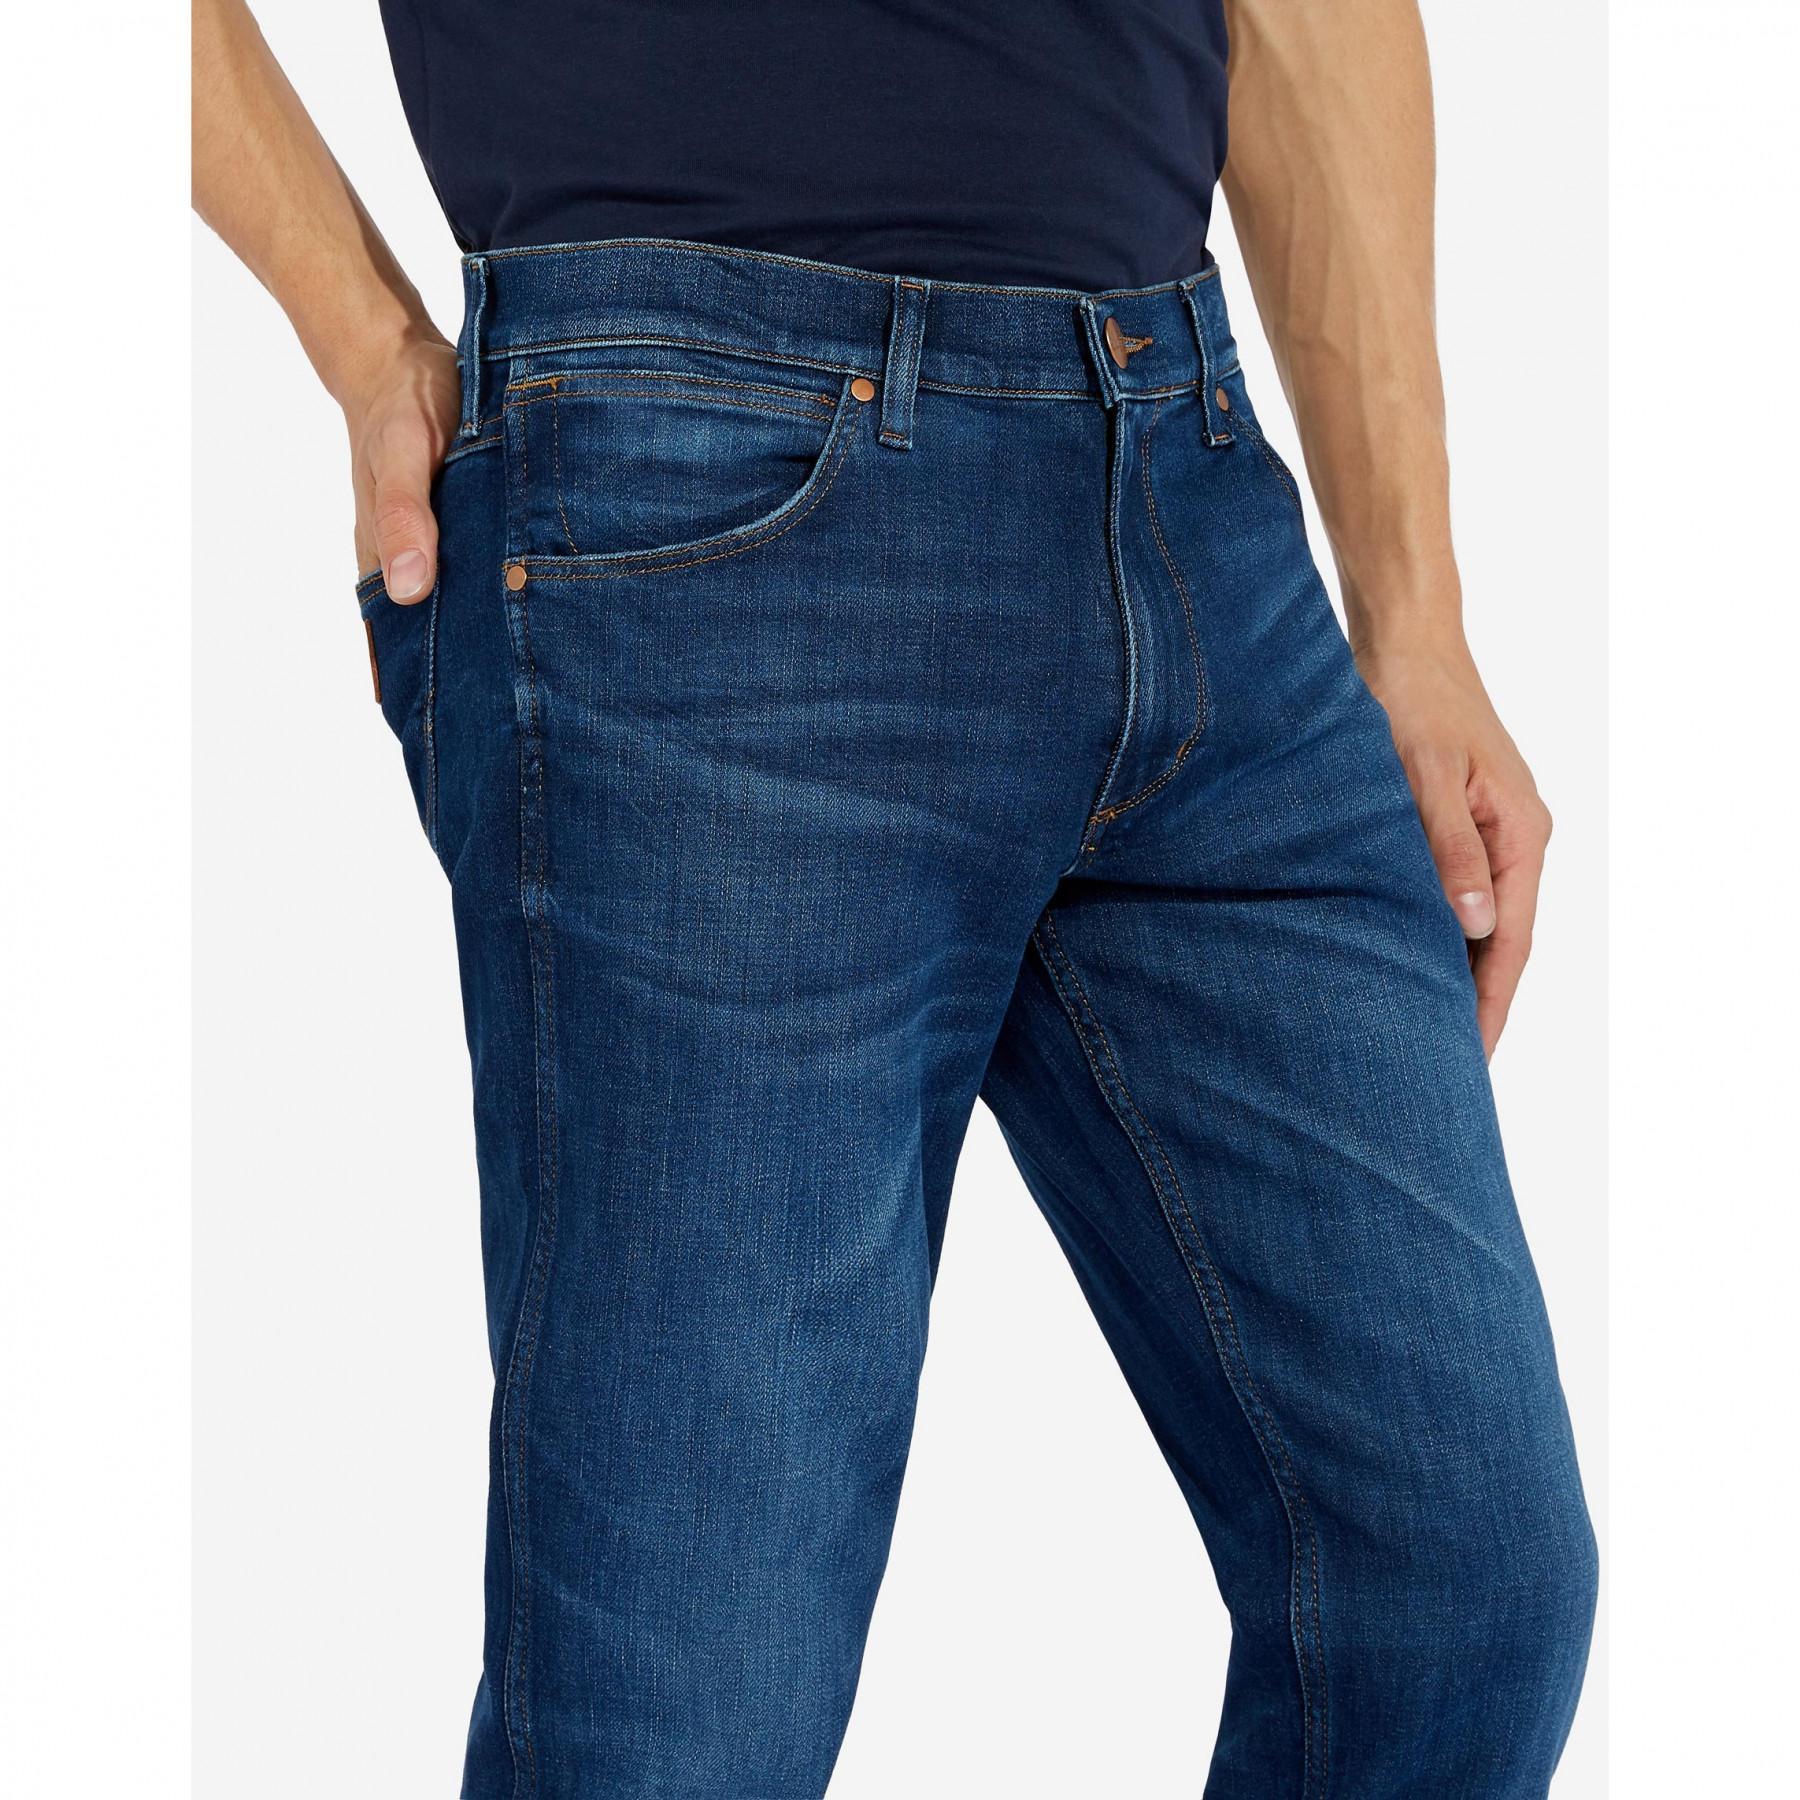 Jeans Wrangler grensboro real